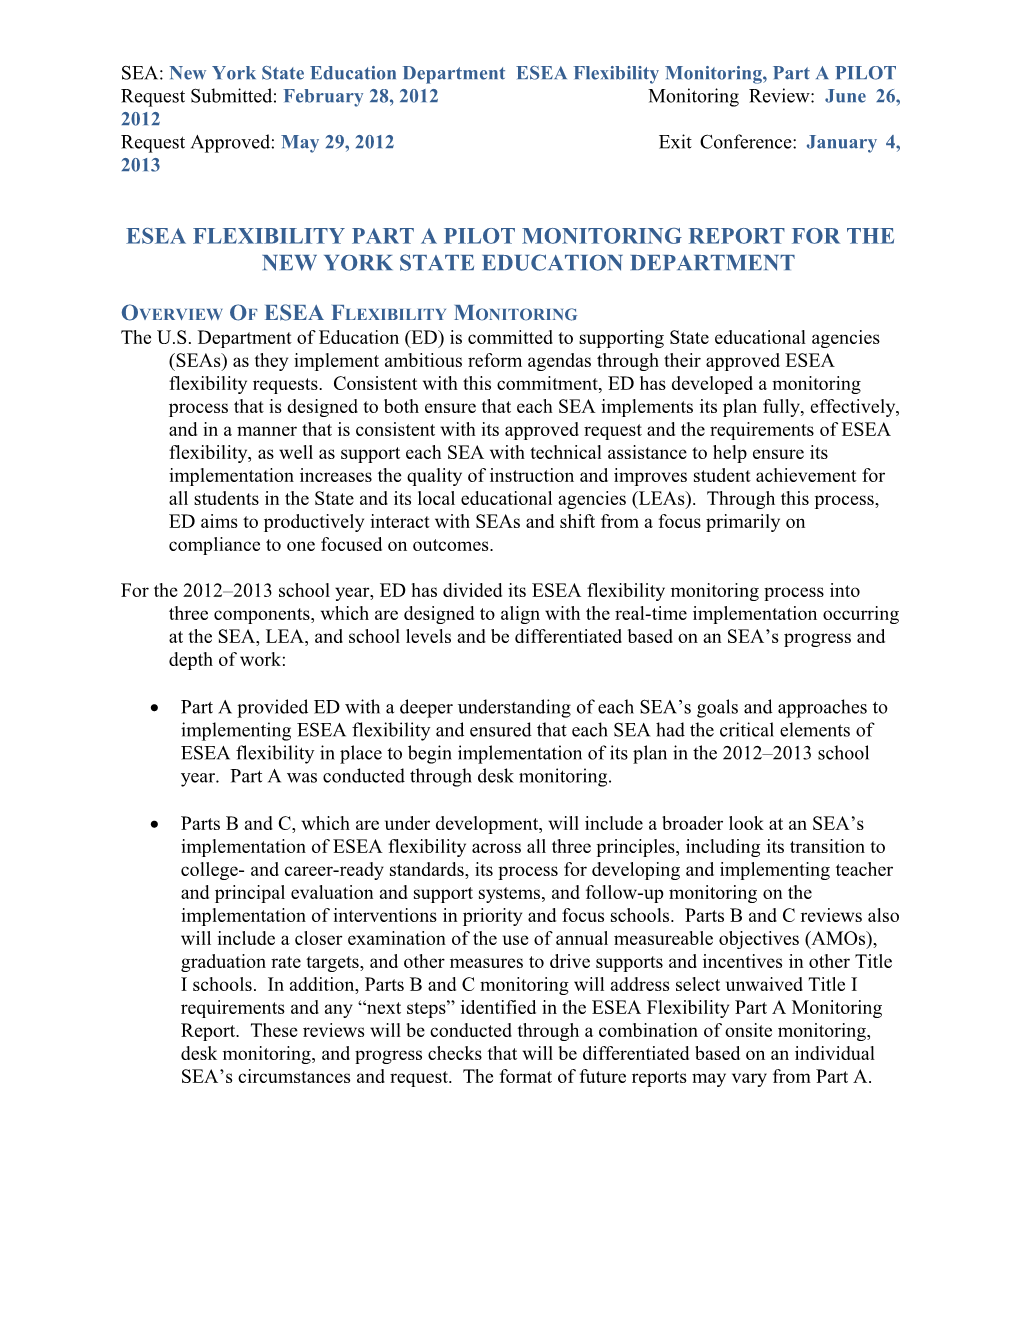 New York ESEA Flexibility Monitoring Report Part A